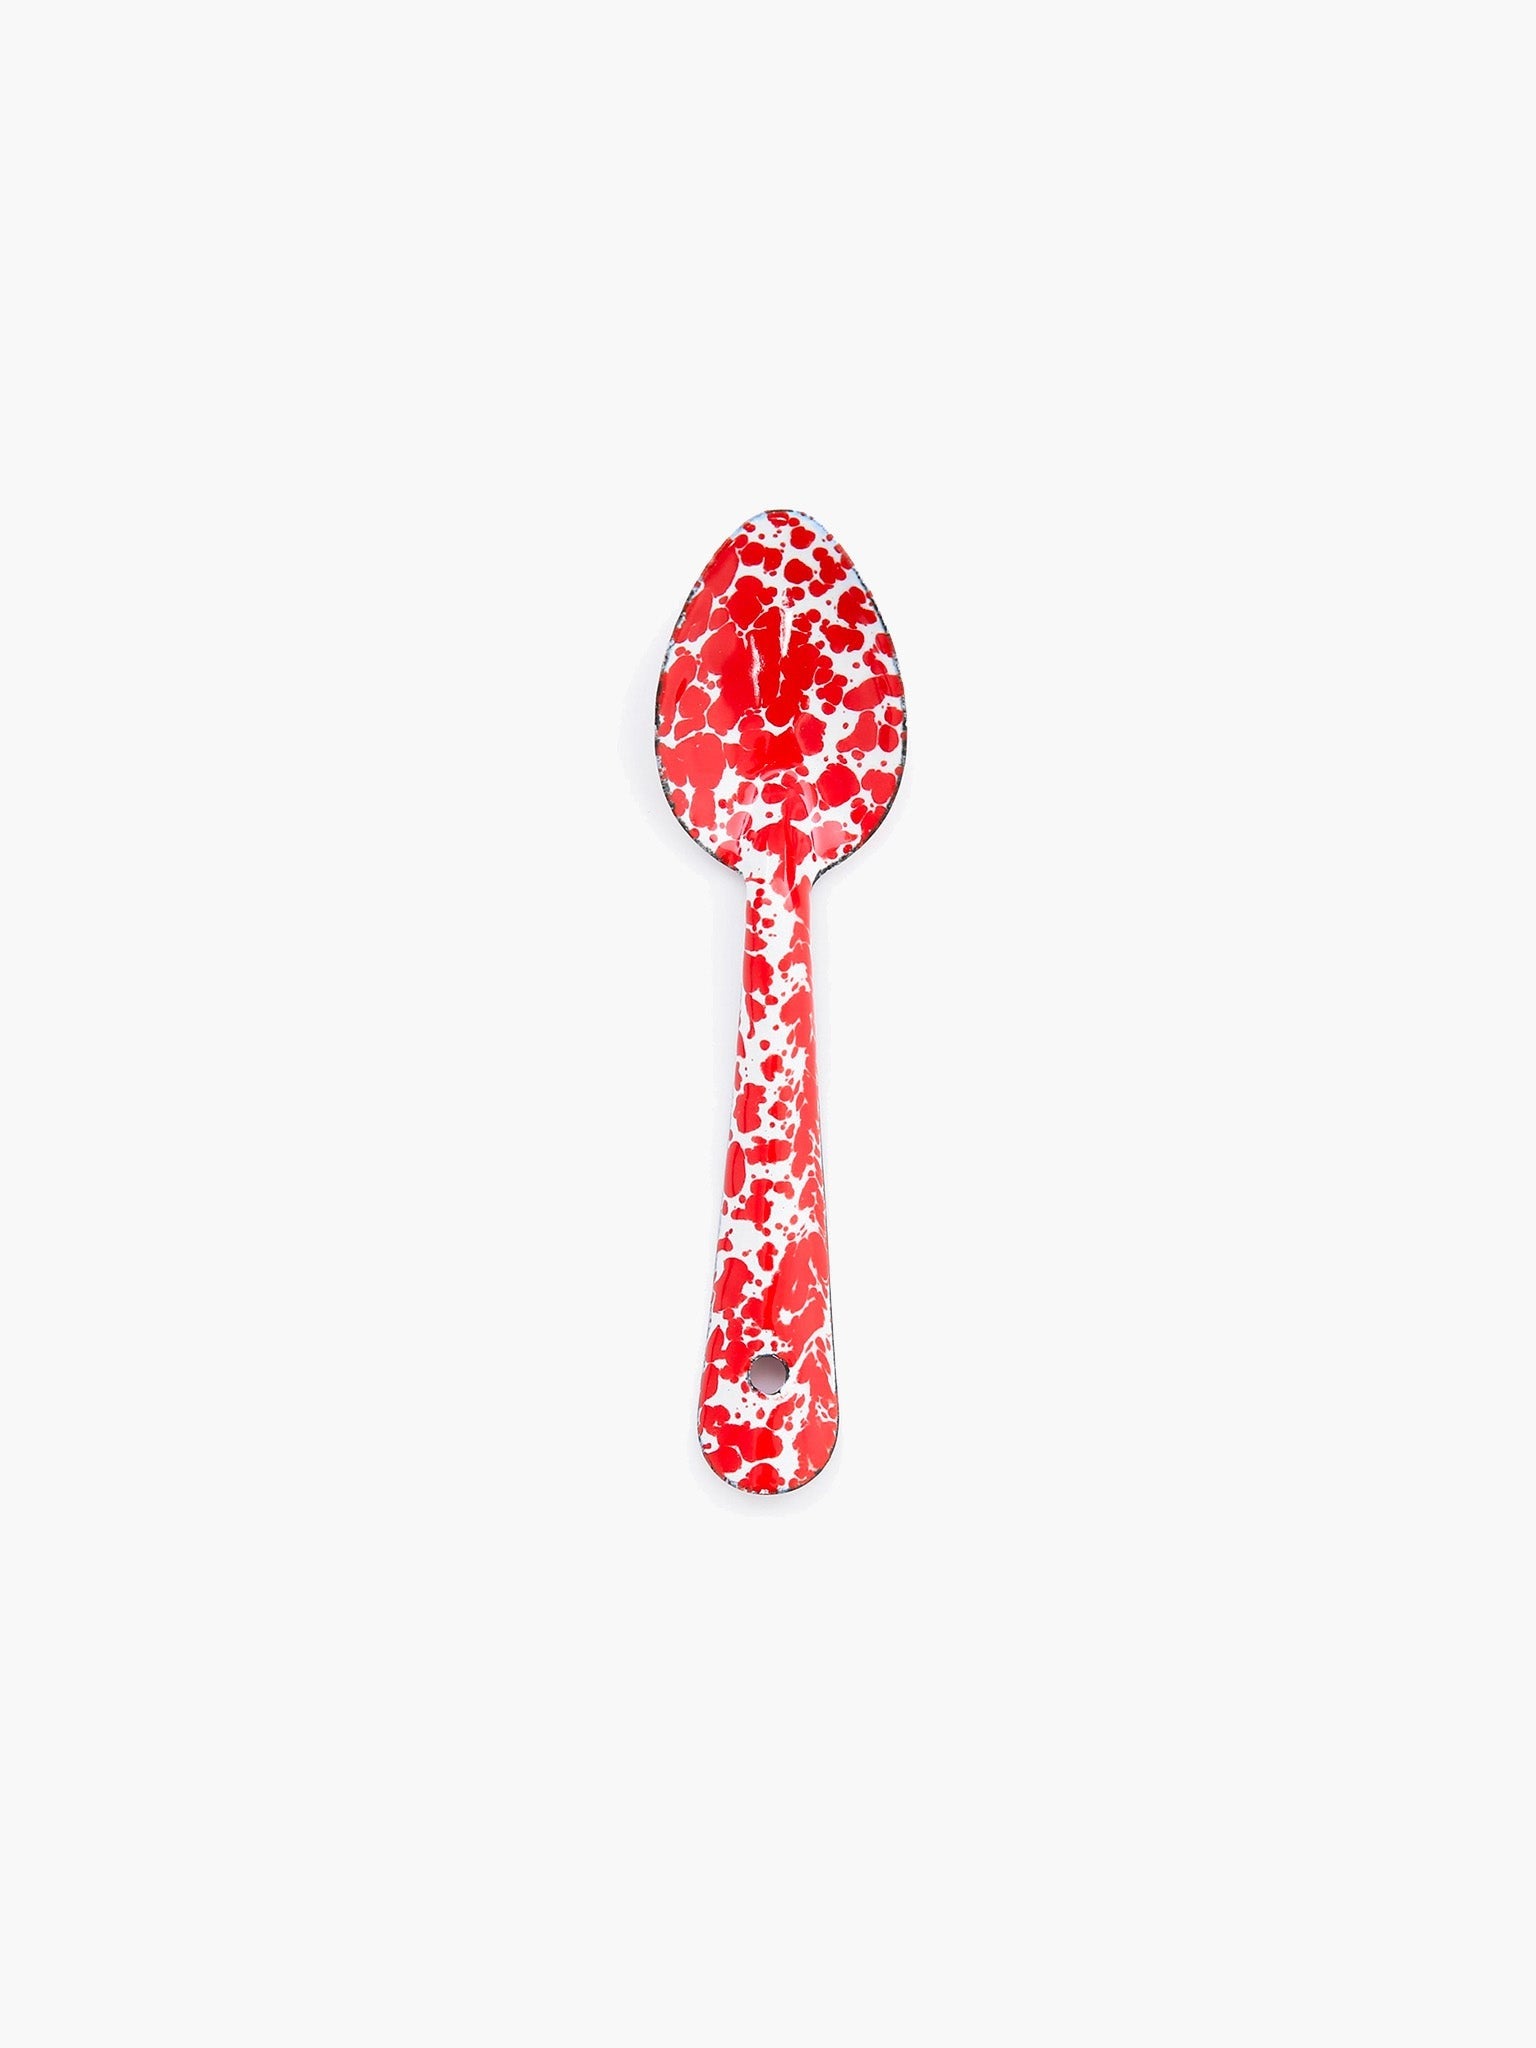 Splatter Small Spoon (15cm) - Red